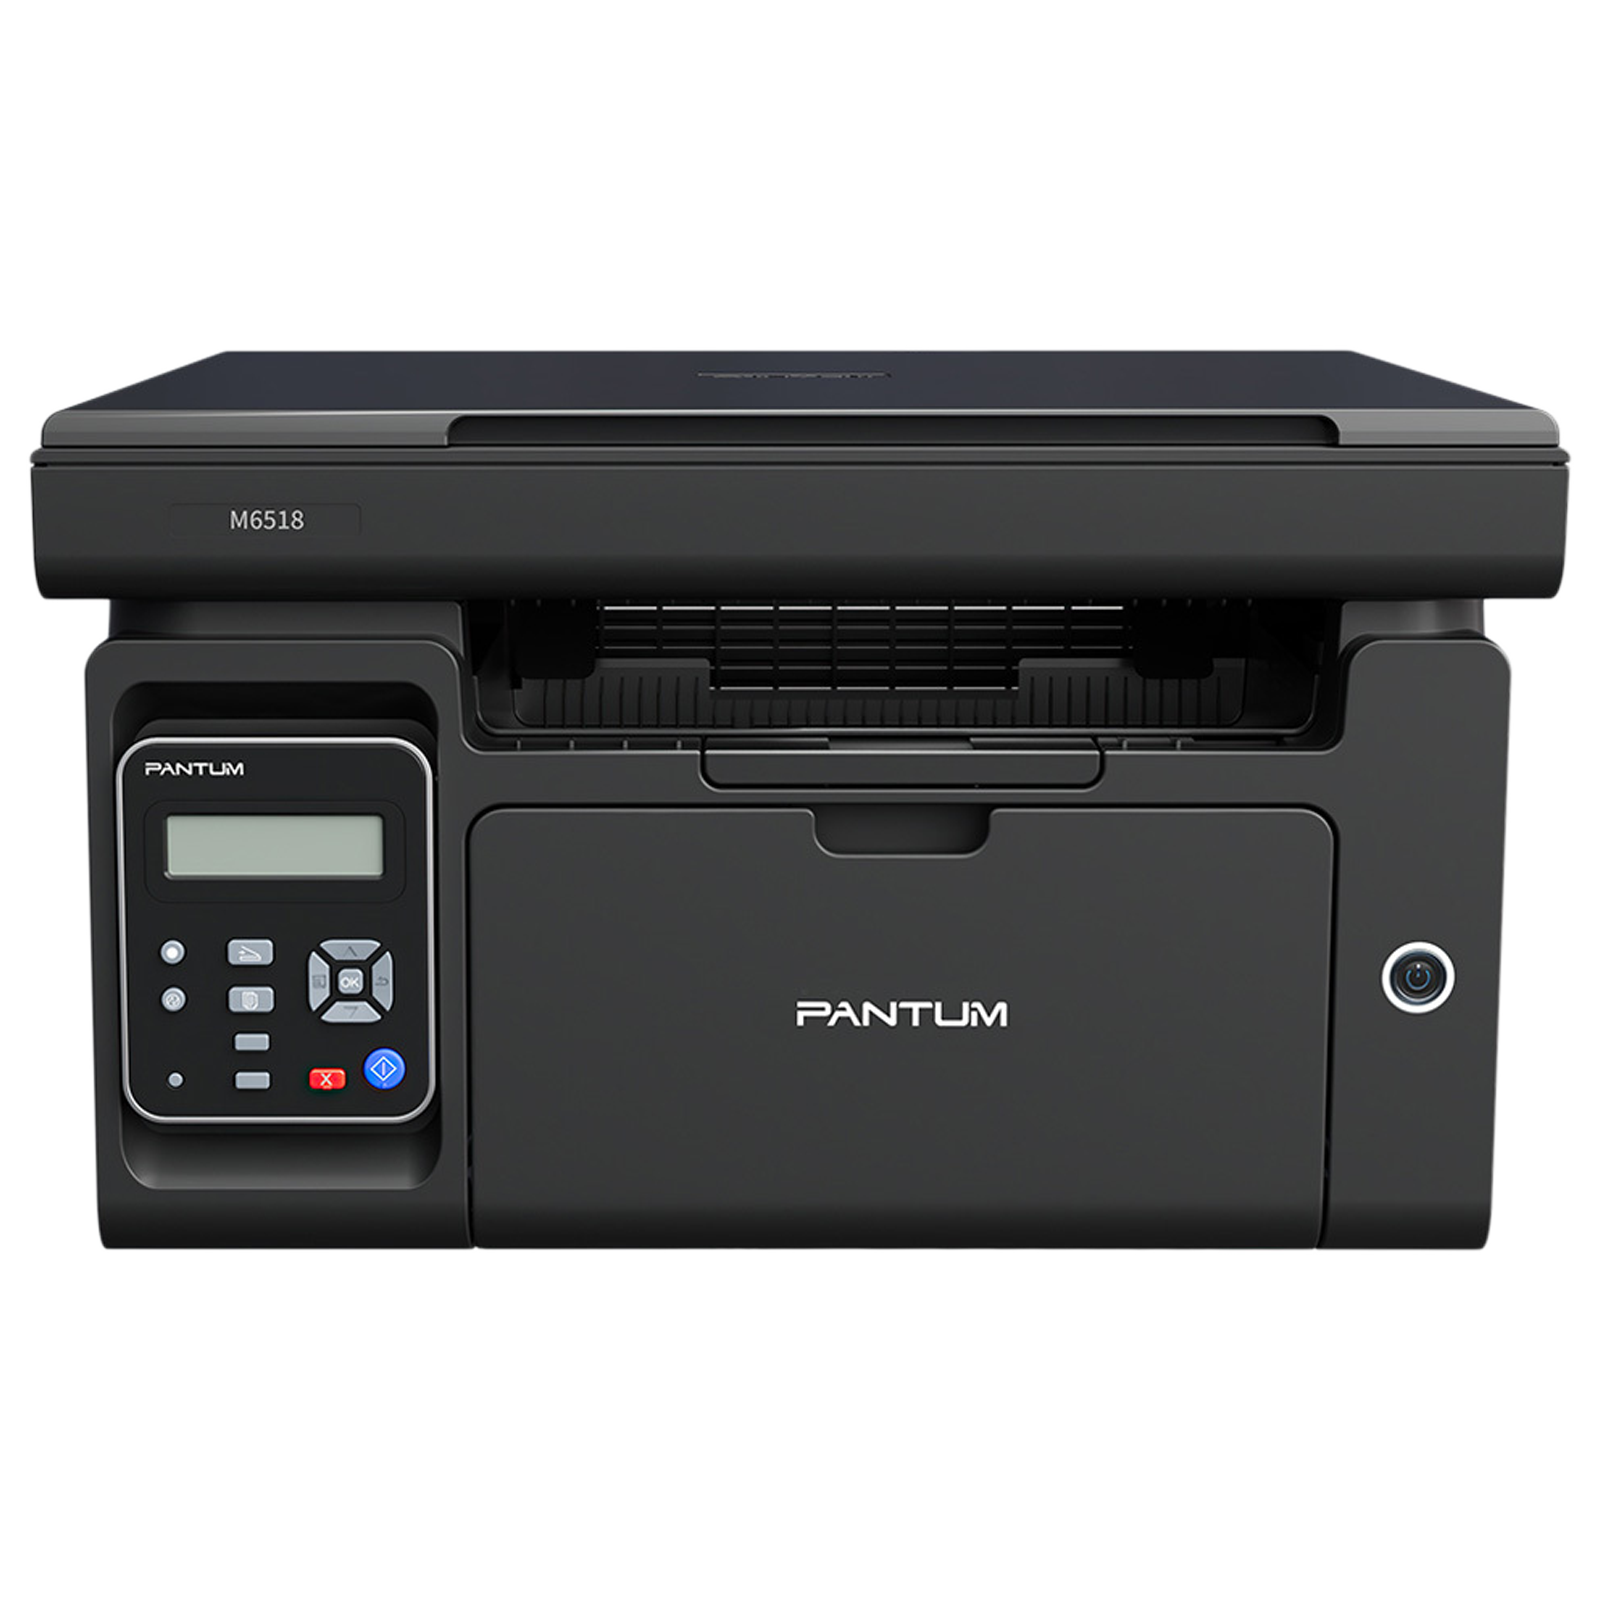 PANTUM Wireless Black & White All-in-One Laserjet Printer (Auto Duplex, M6518, Black)